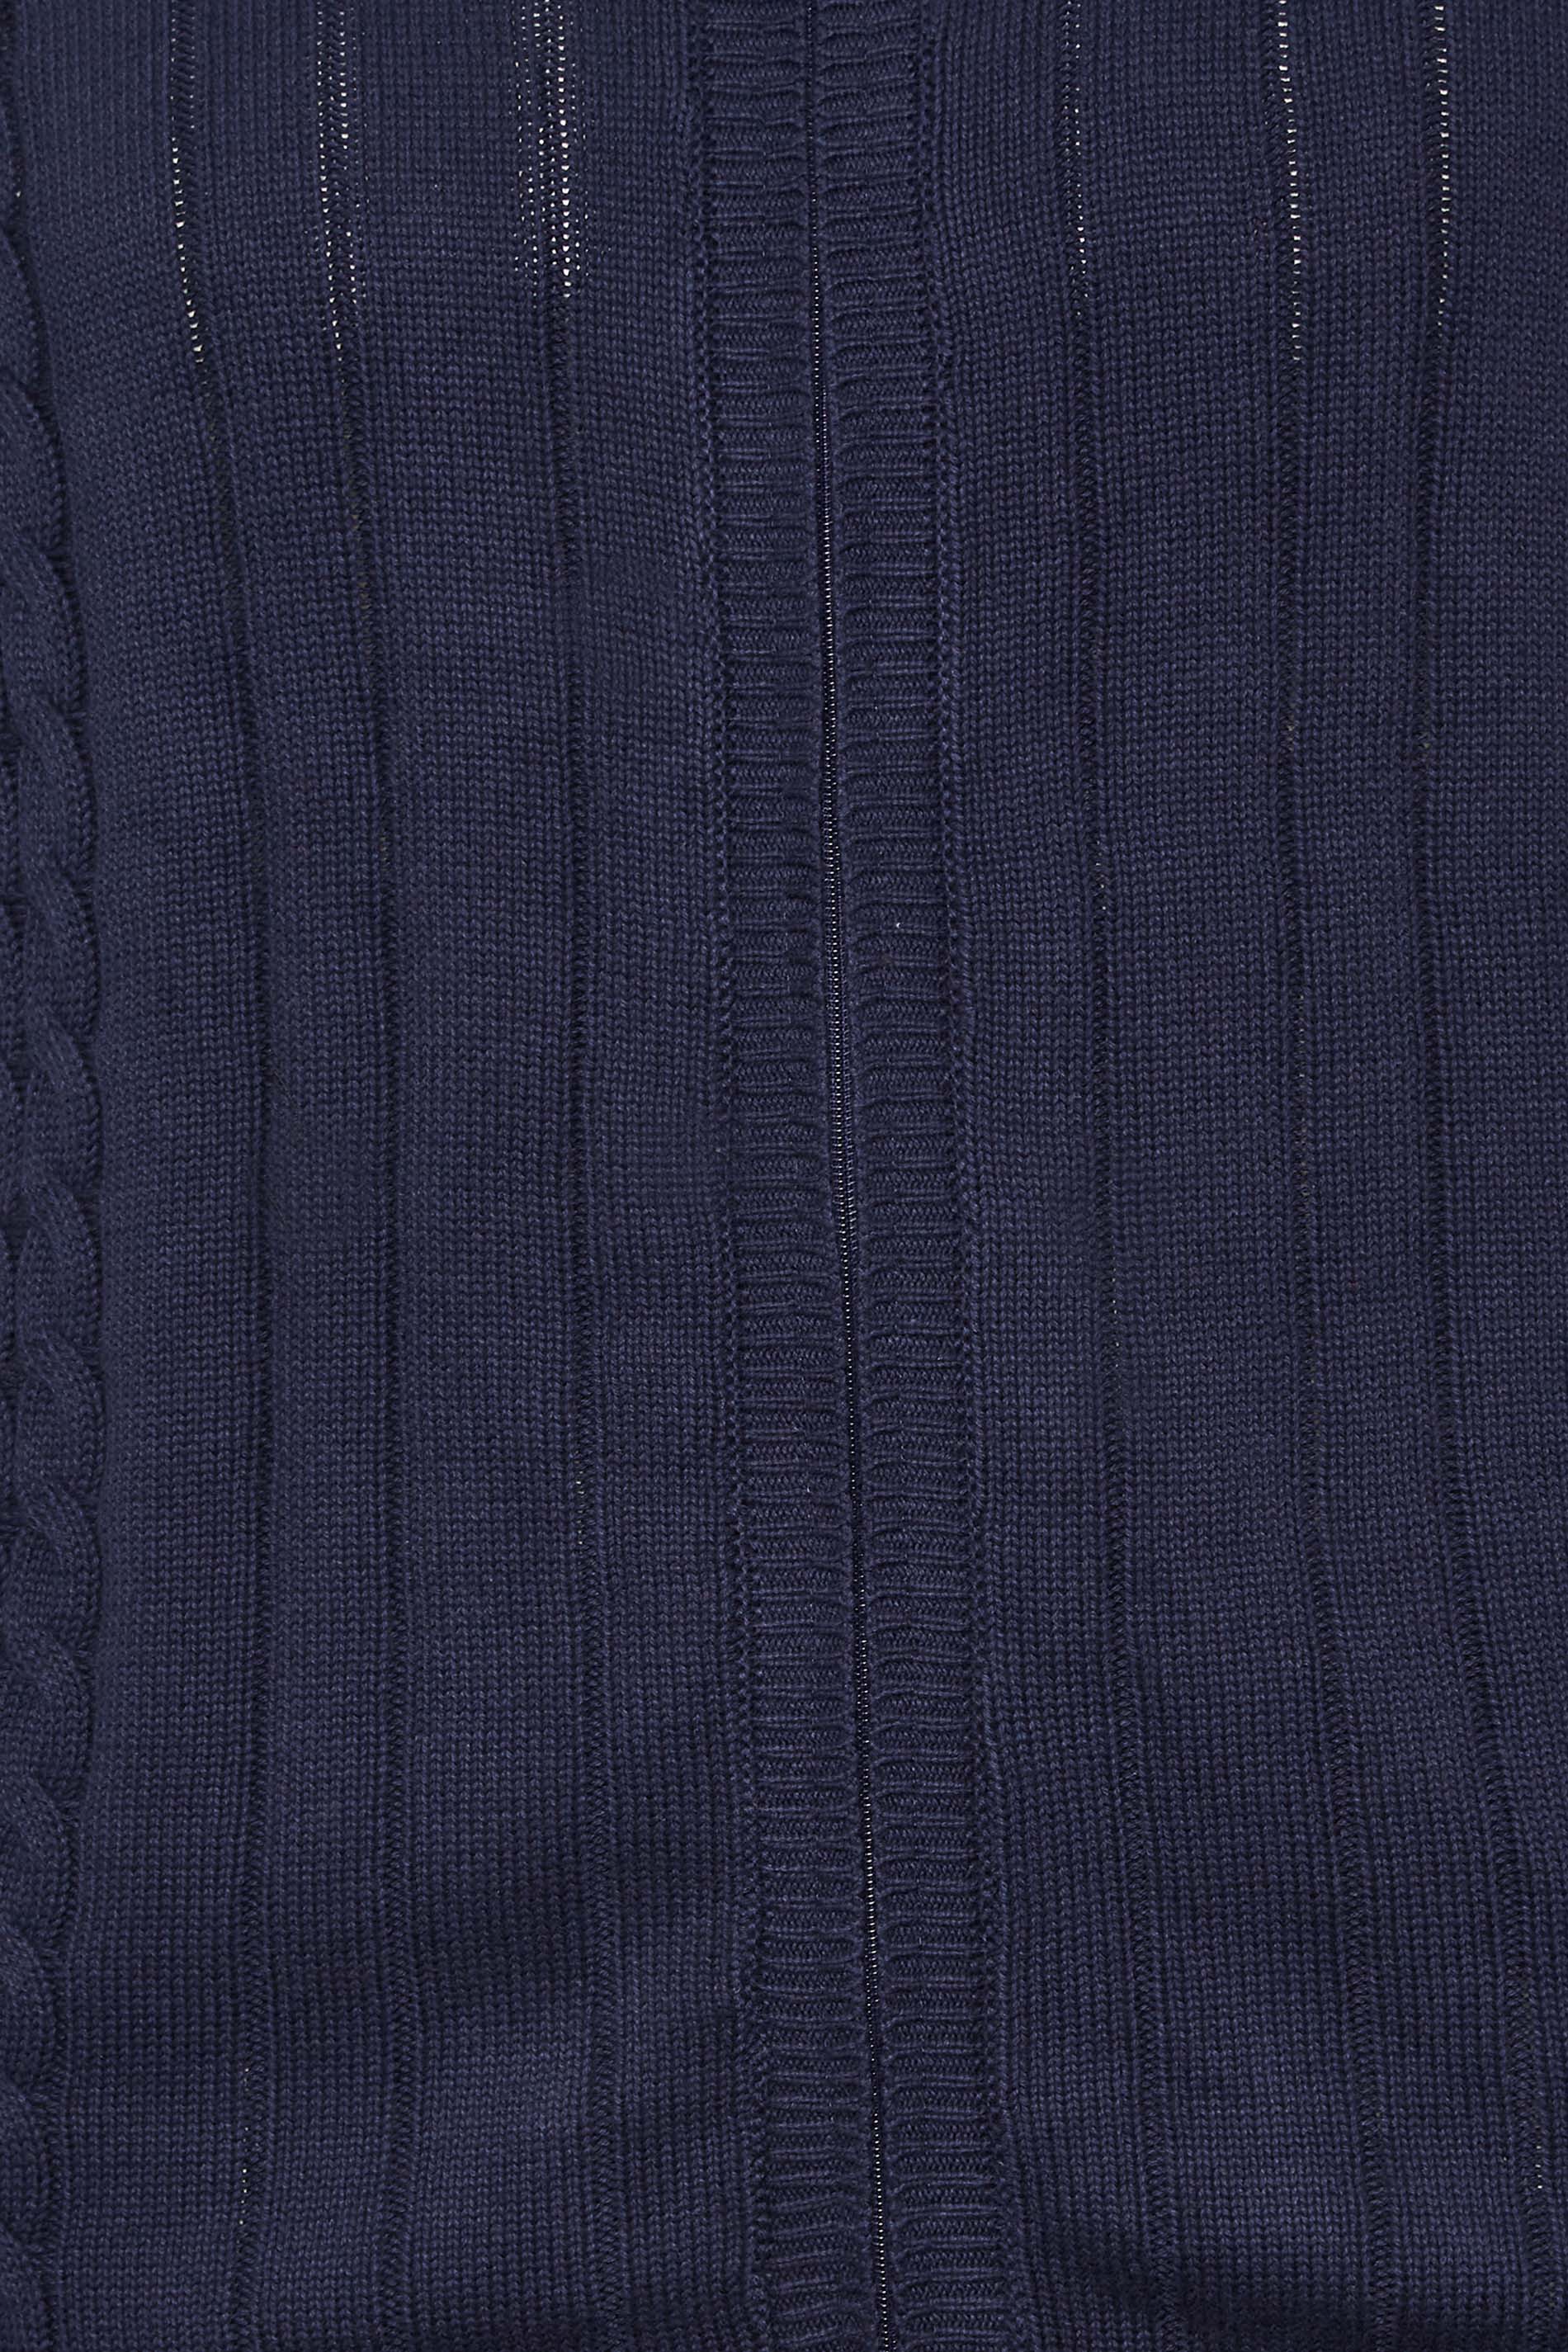 KAM Big & Tall Navy Blue Cable Knit Cardigan | BadRhino 2